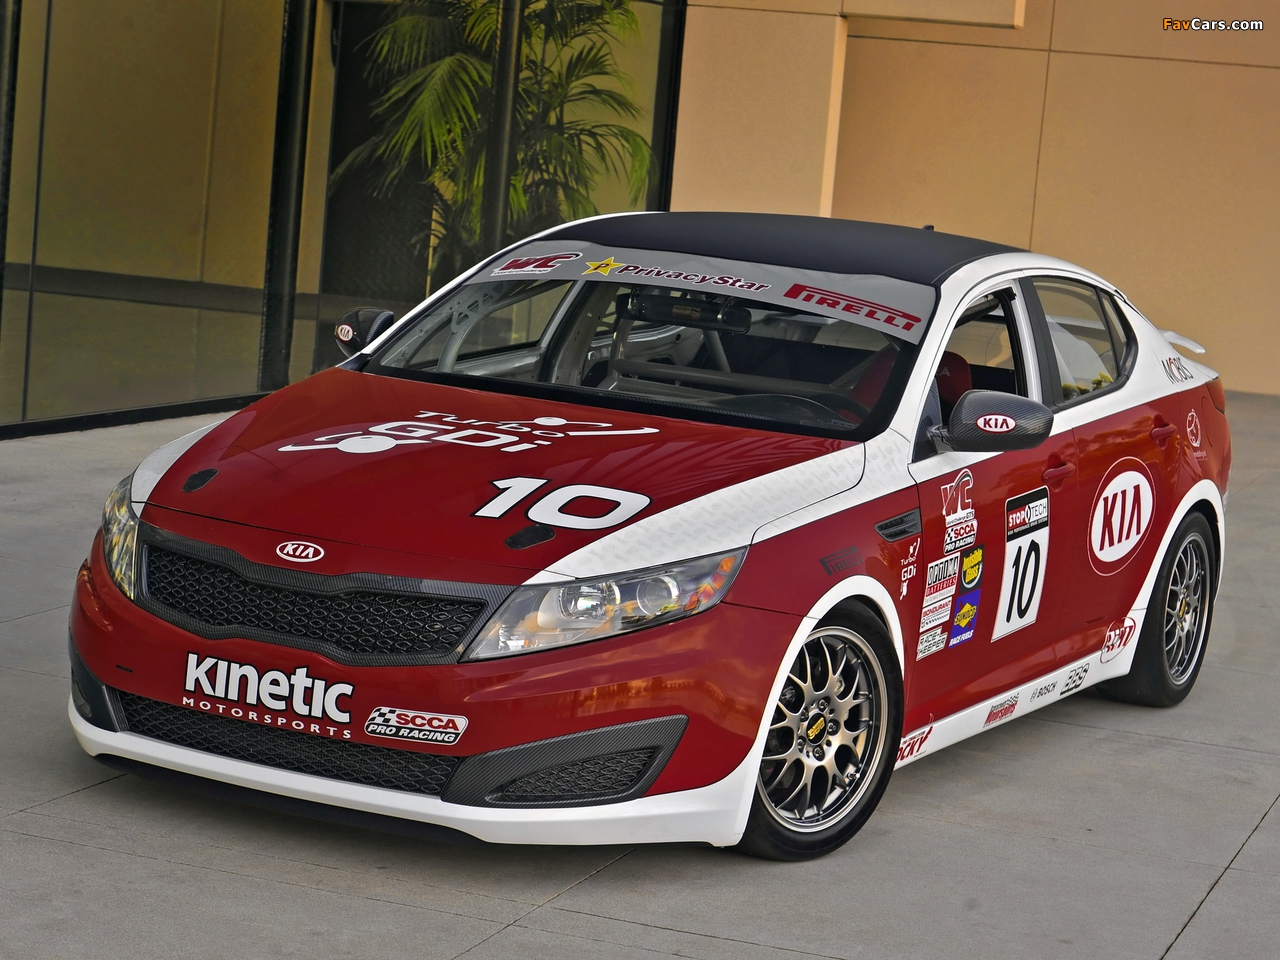 Kia Optima SX World Challenge GTS Race Car (TF) 2011 pictures (1280 x 960)